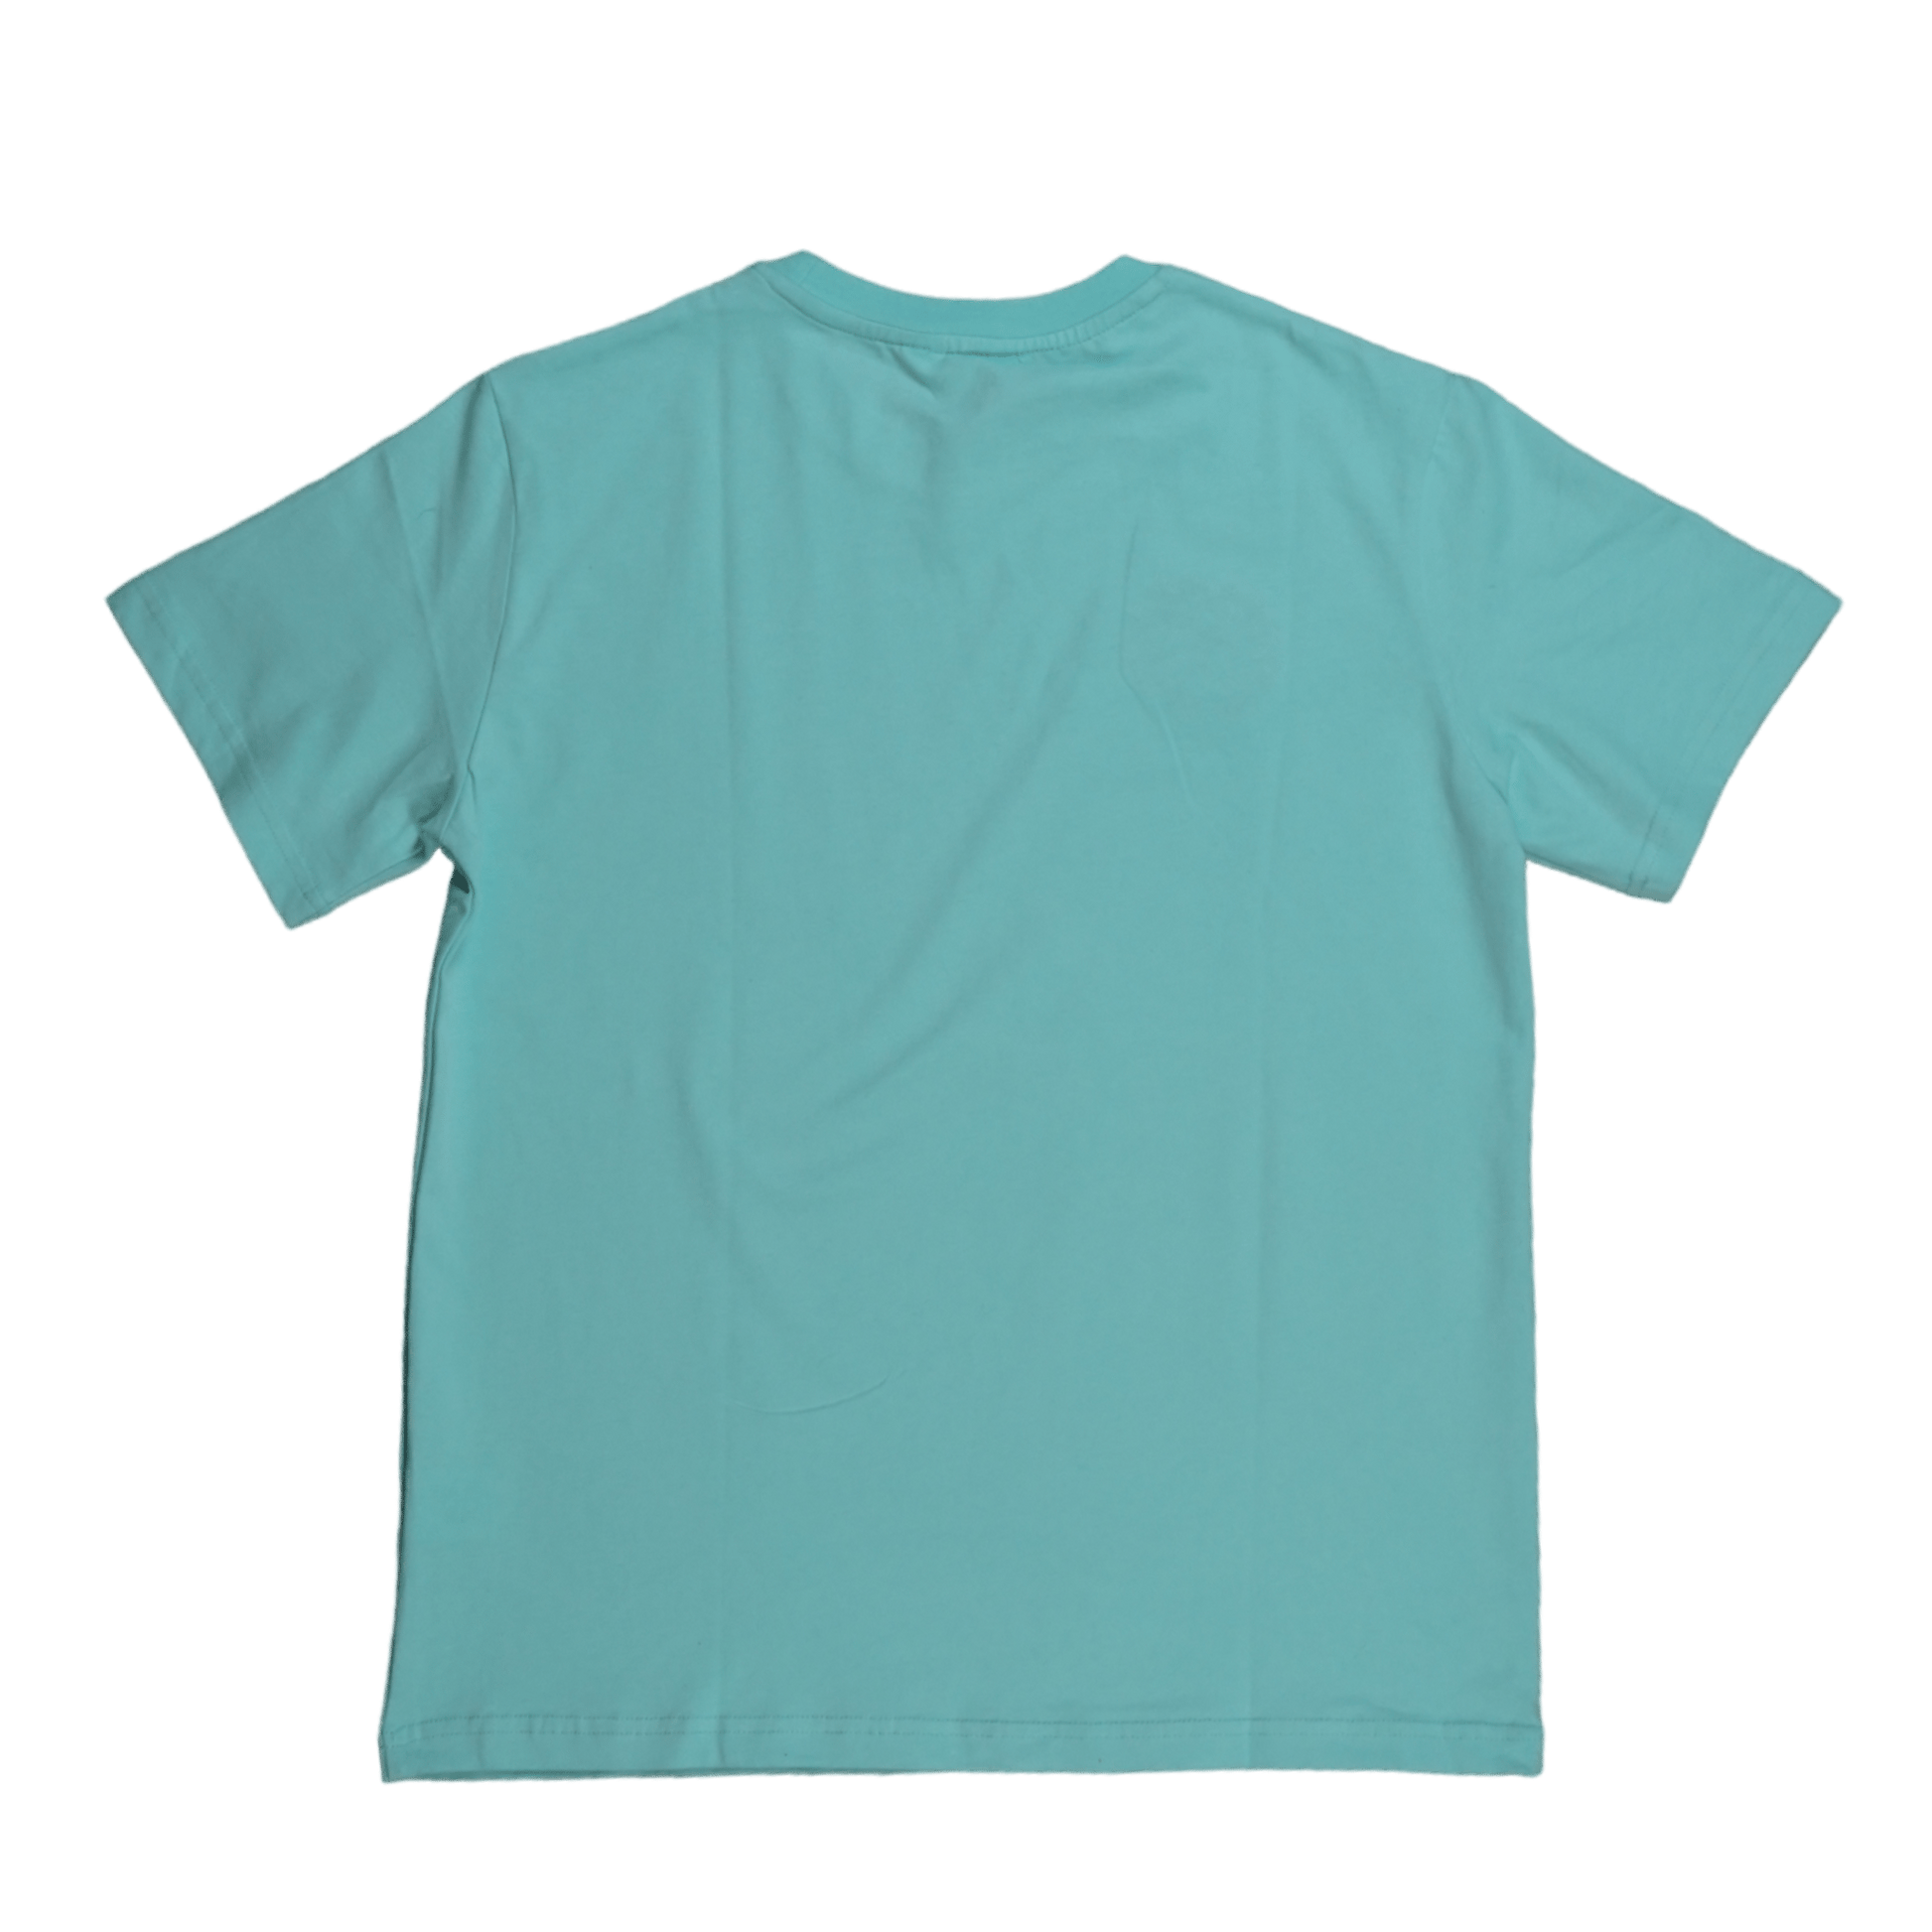 Haint Blue T-shirt - SweetGrass Clothing Company